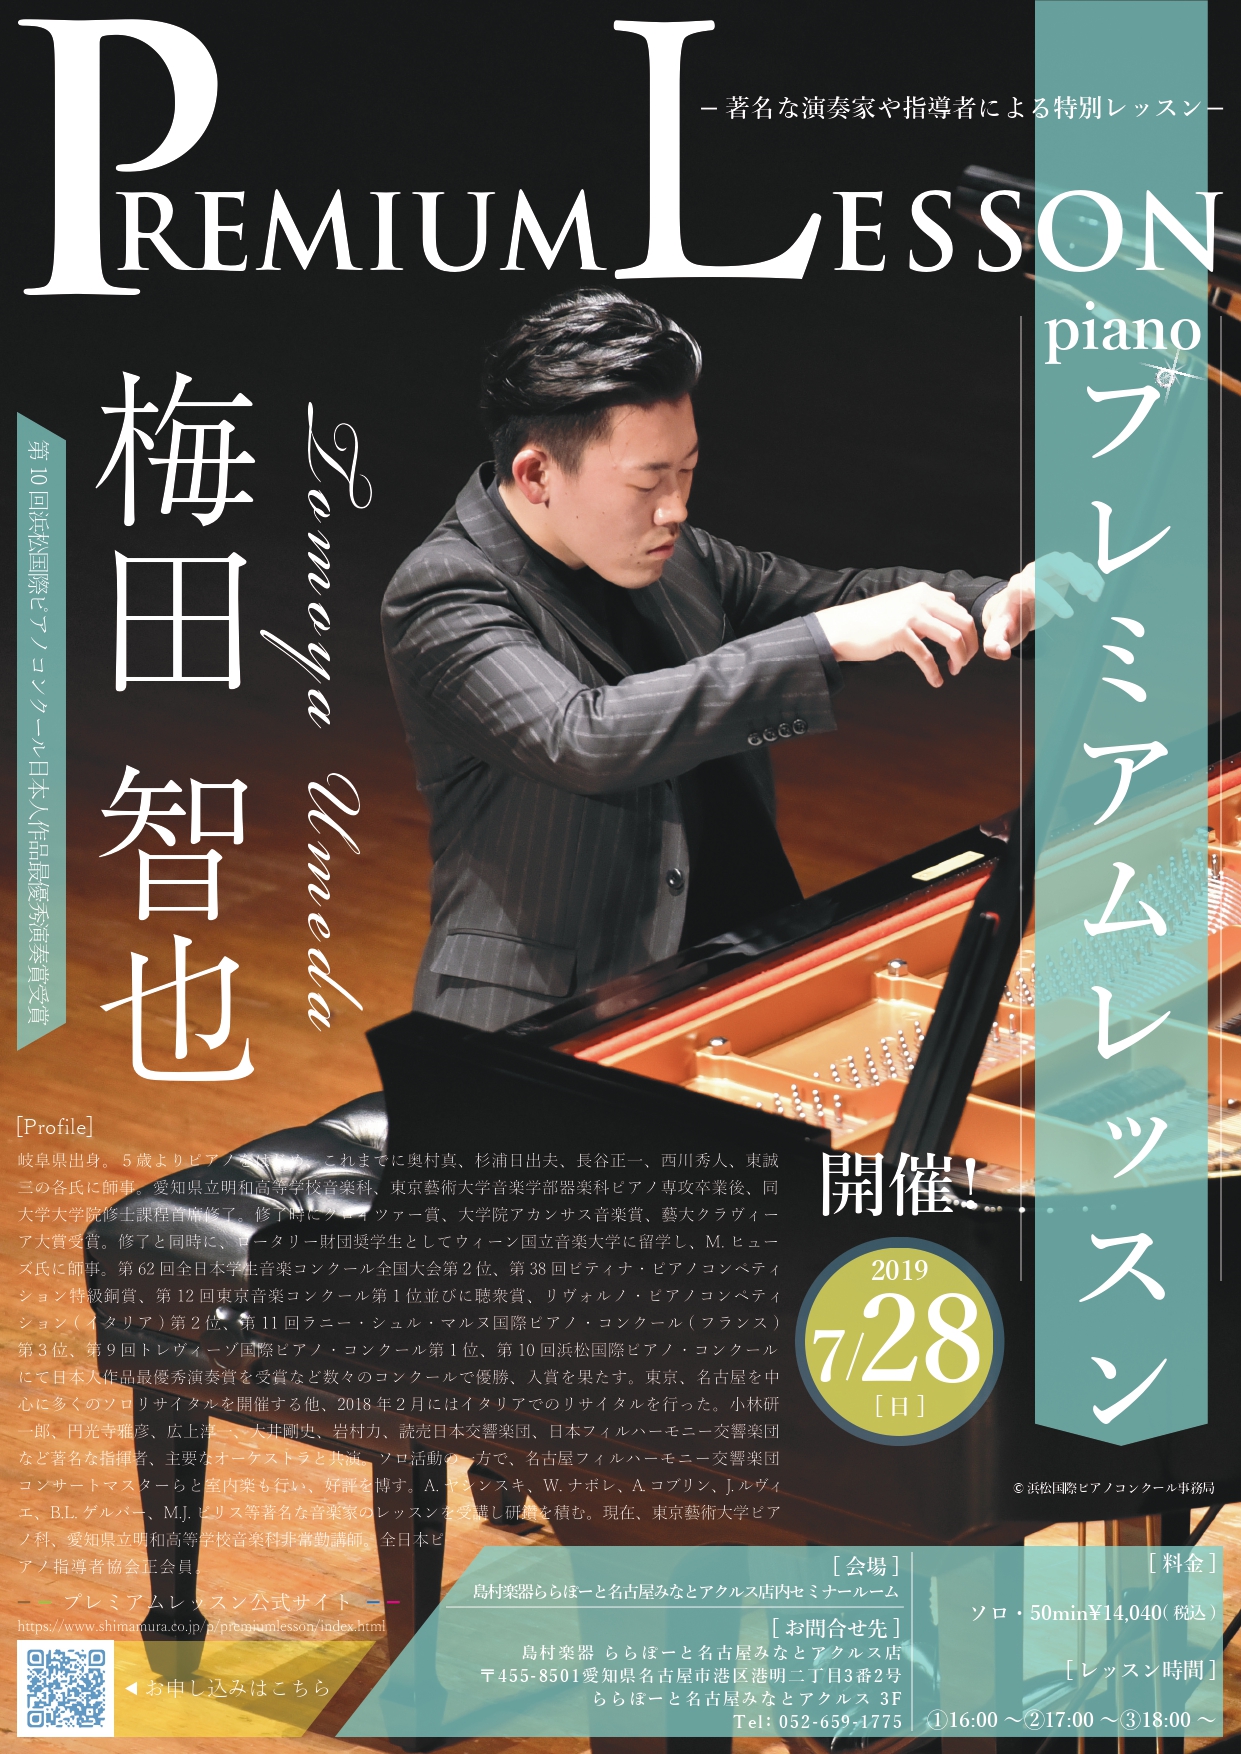 [https://www.shimamura.co.jp/shop/nagoya-aquls/information/20190519/5290::title=【ブルーミングコンサート】2019/7/28(日)梅田智也ピアノコンサート～Blooming Concert～]の後には！]]注目の若手ピア […]